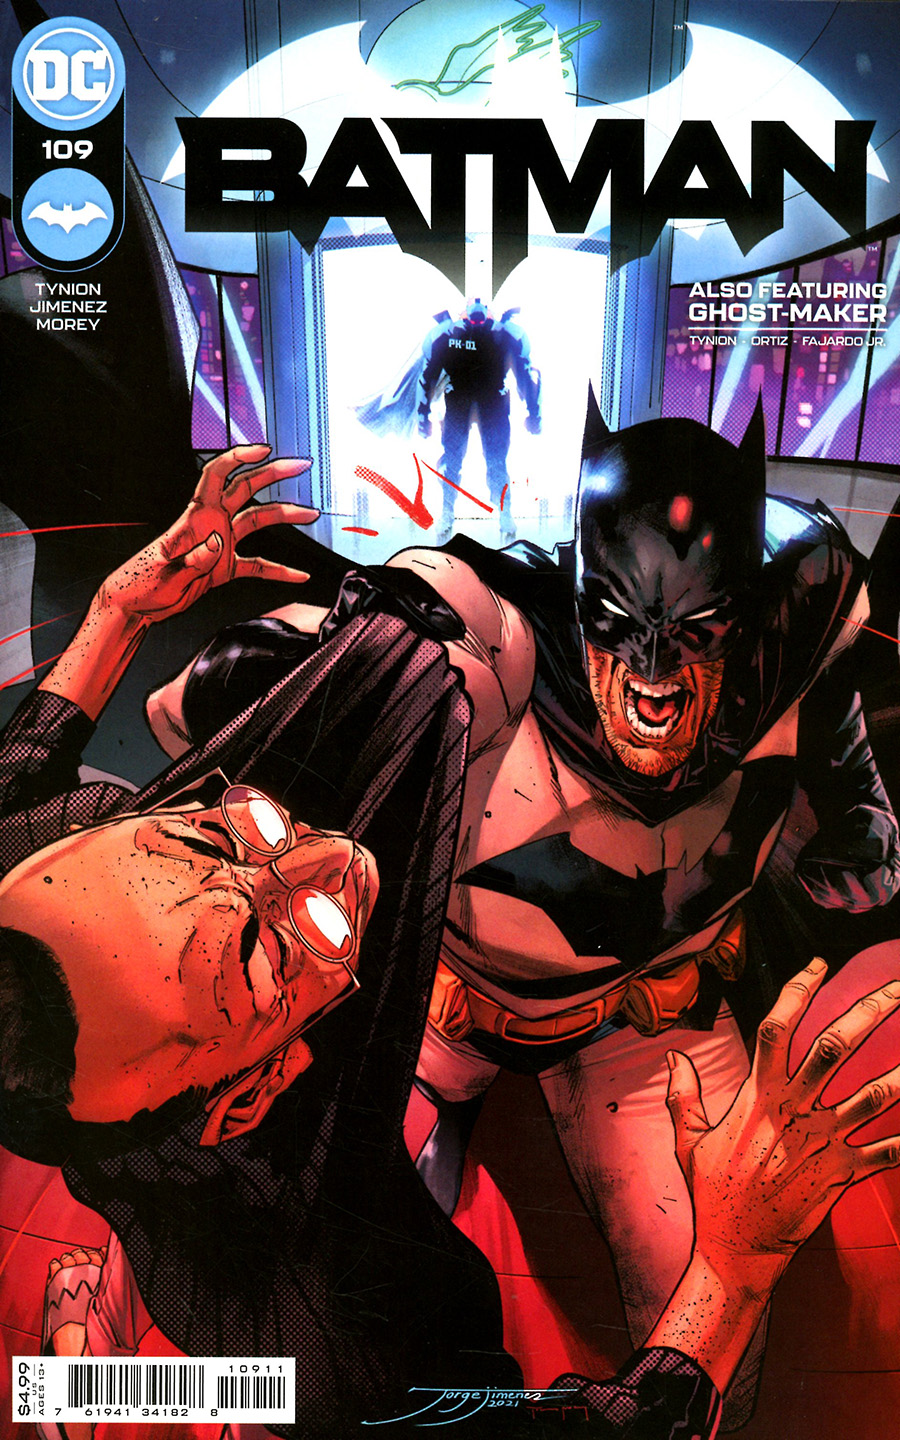 Batman Vol 3 #109 Cover A Regular Jorge Jimenez Cover